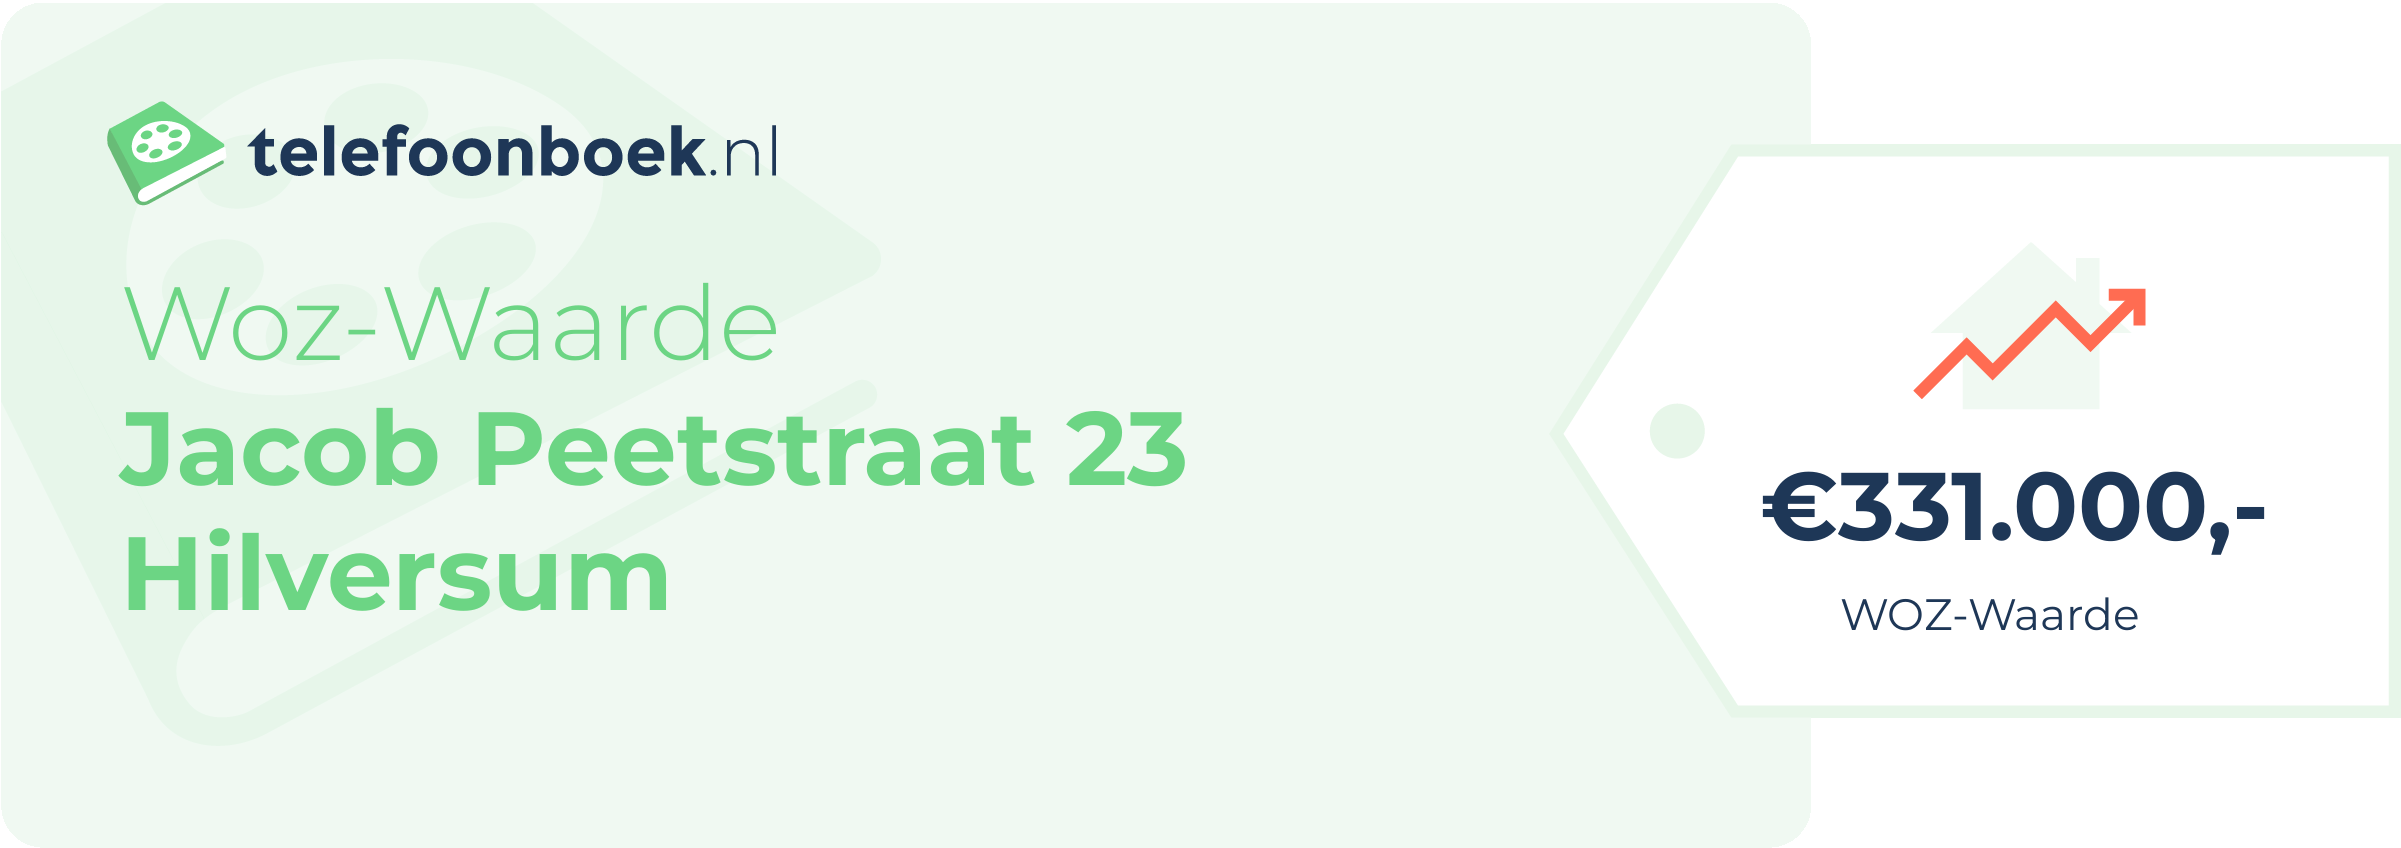 WOZ-waarde Jacob Peetstraat 23 Hilversum